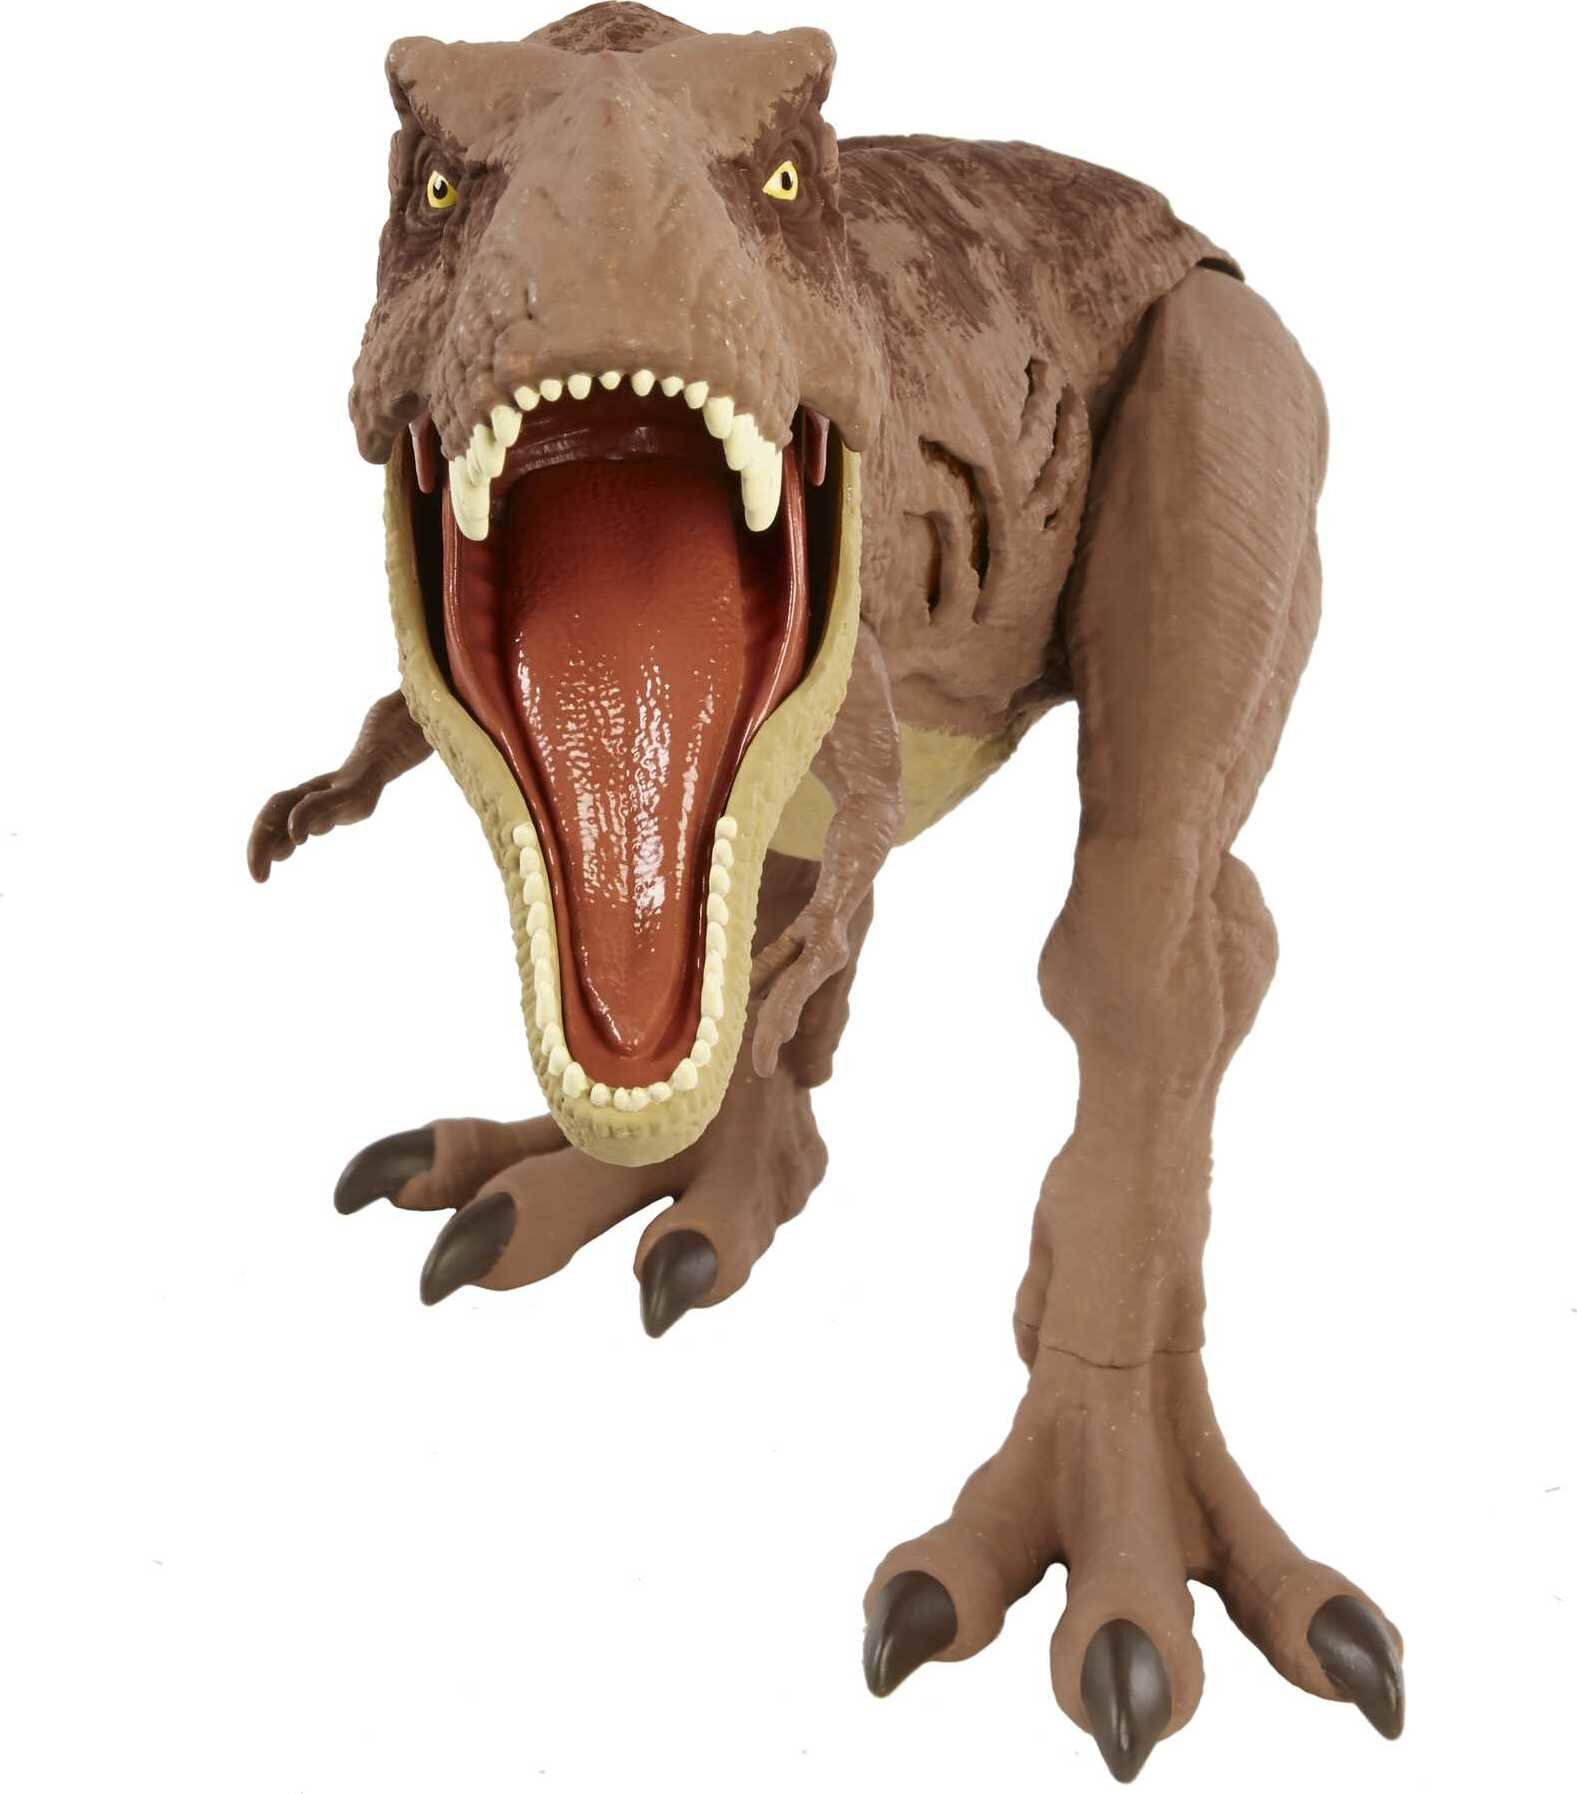 Jurassic World Extreme Damage Tyrannosaurus Rex Action Figure, Transforming Dinosaur Toy with Motion - image 4 of 6